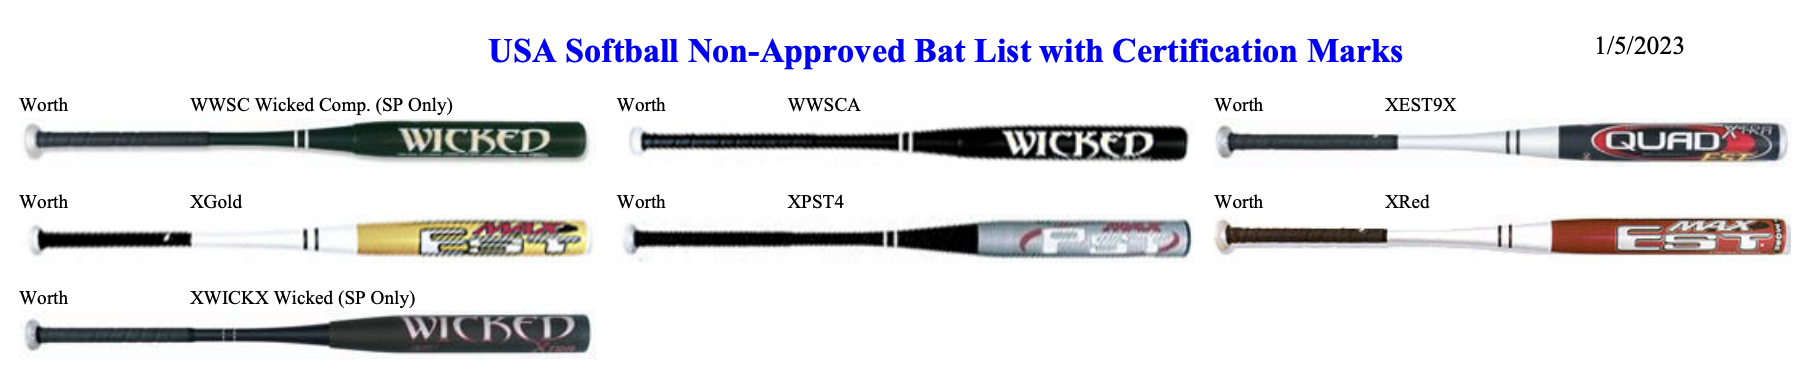 Non-Approved Bat 2023 pt 2